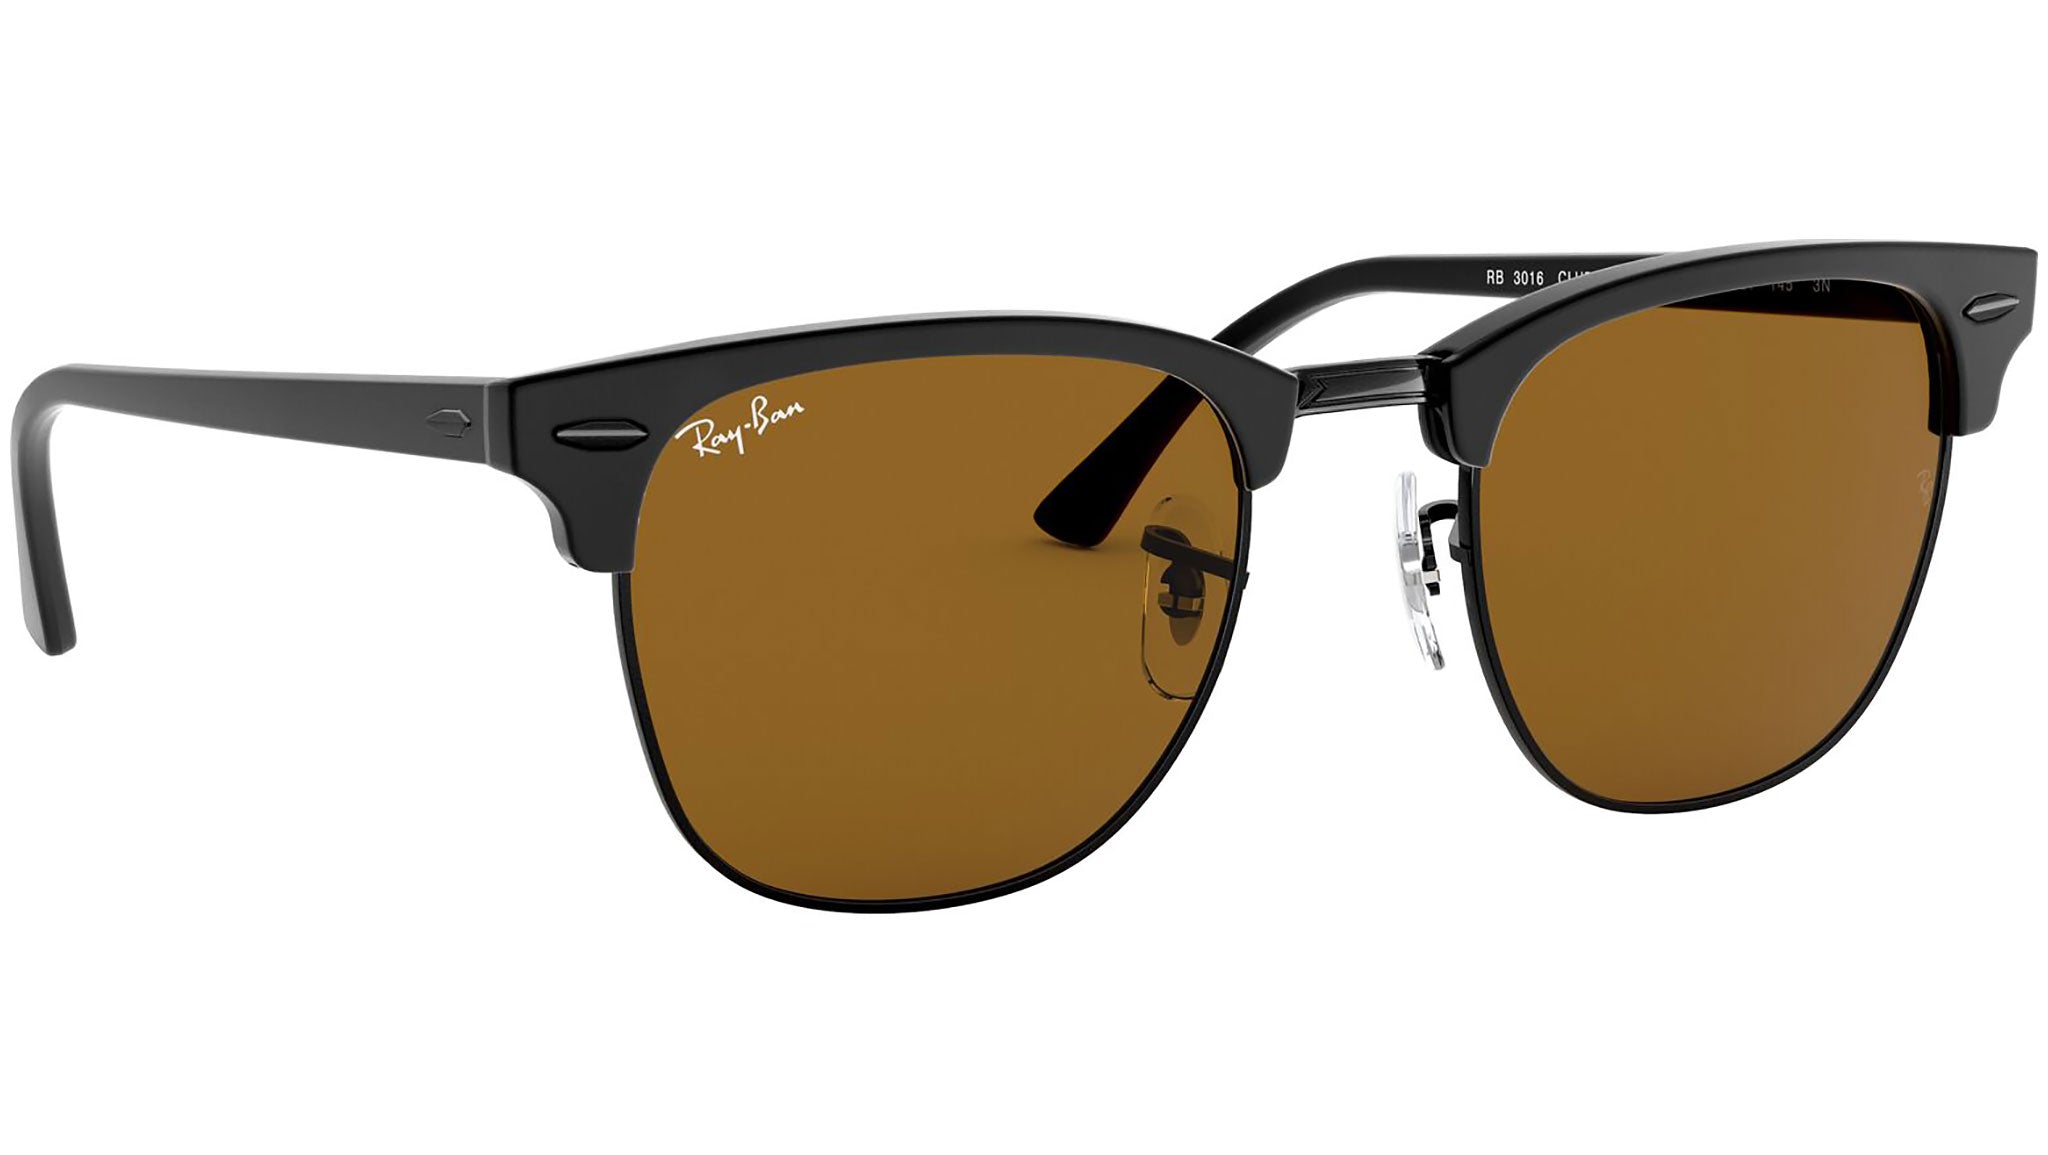 Ray-Ban RB3016 Clubmaster Adult Sunglasses - Walmart.com